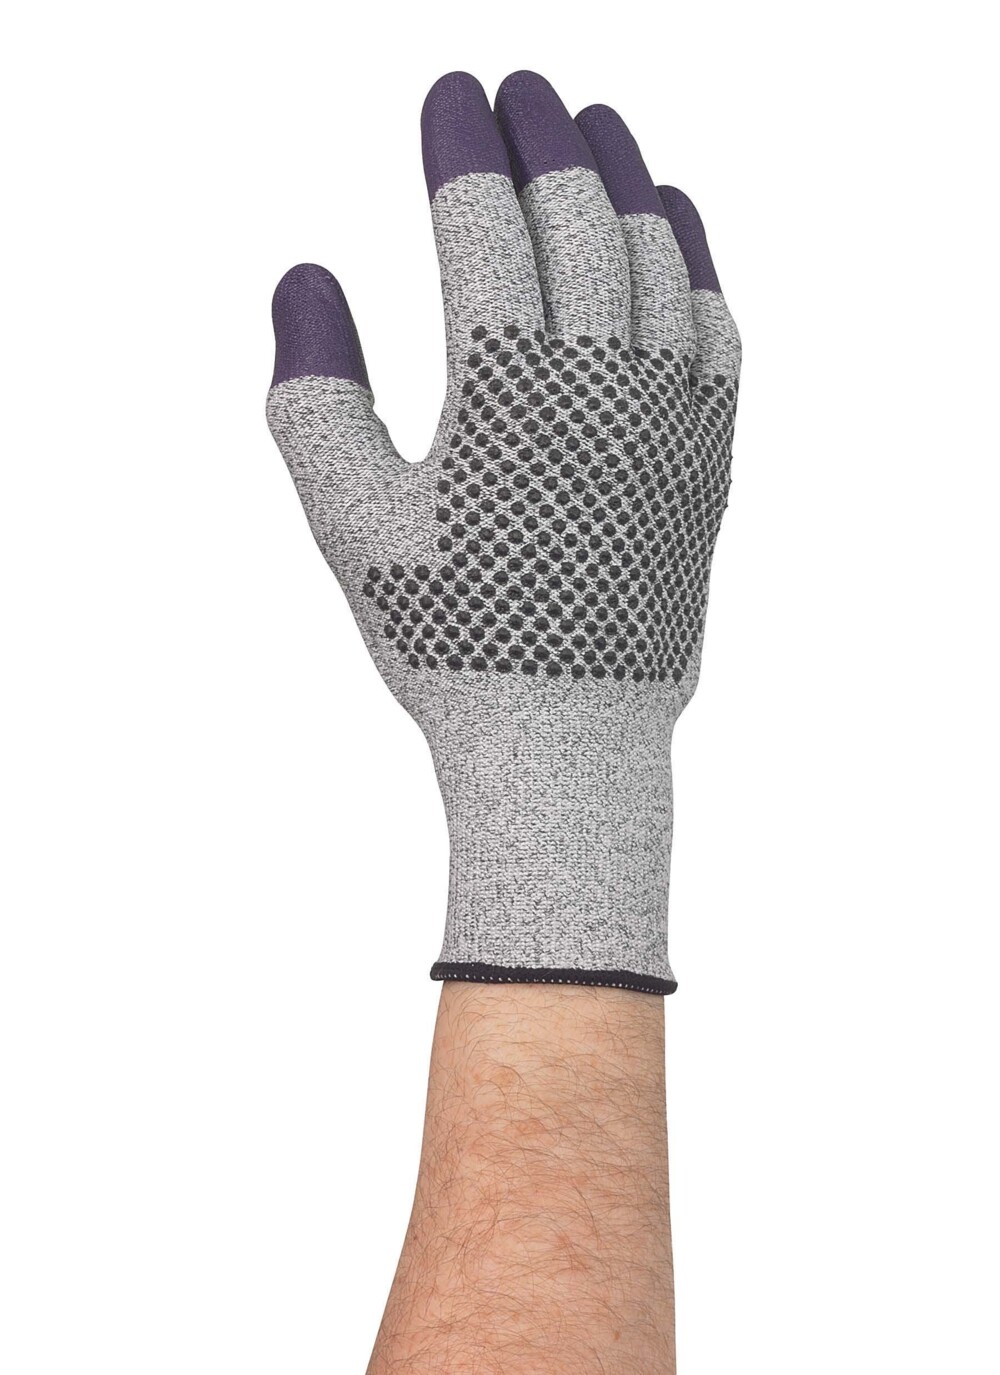 KleenGuard® G60 Endurapro™ Dual Grip Purple Nitrile™ Gloves 97431 Grey & Purple, 8, 1x12 (12 gloves) - 97431